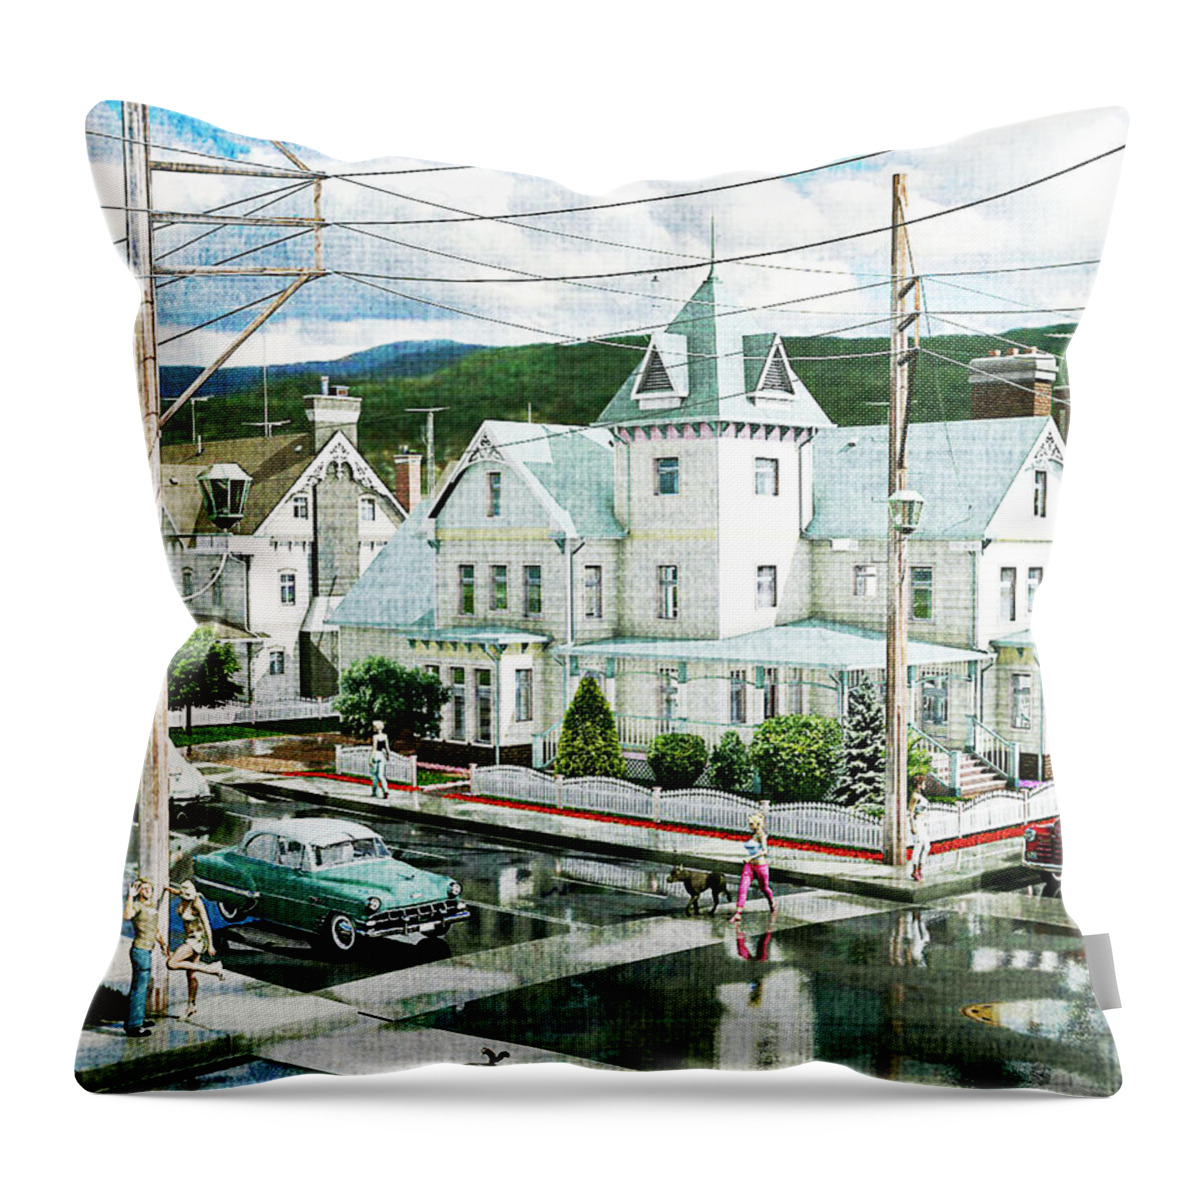 Daz 3d Throw Pillow featuring the digital art Virtual City Life by Digital Art Cafe